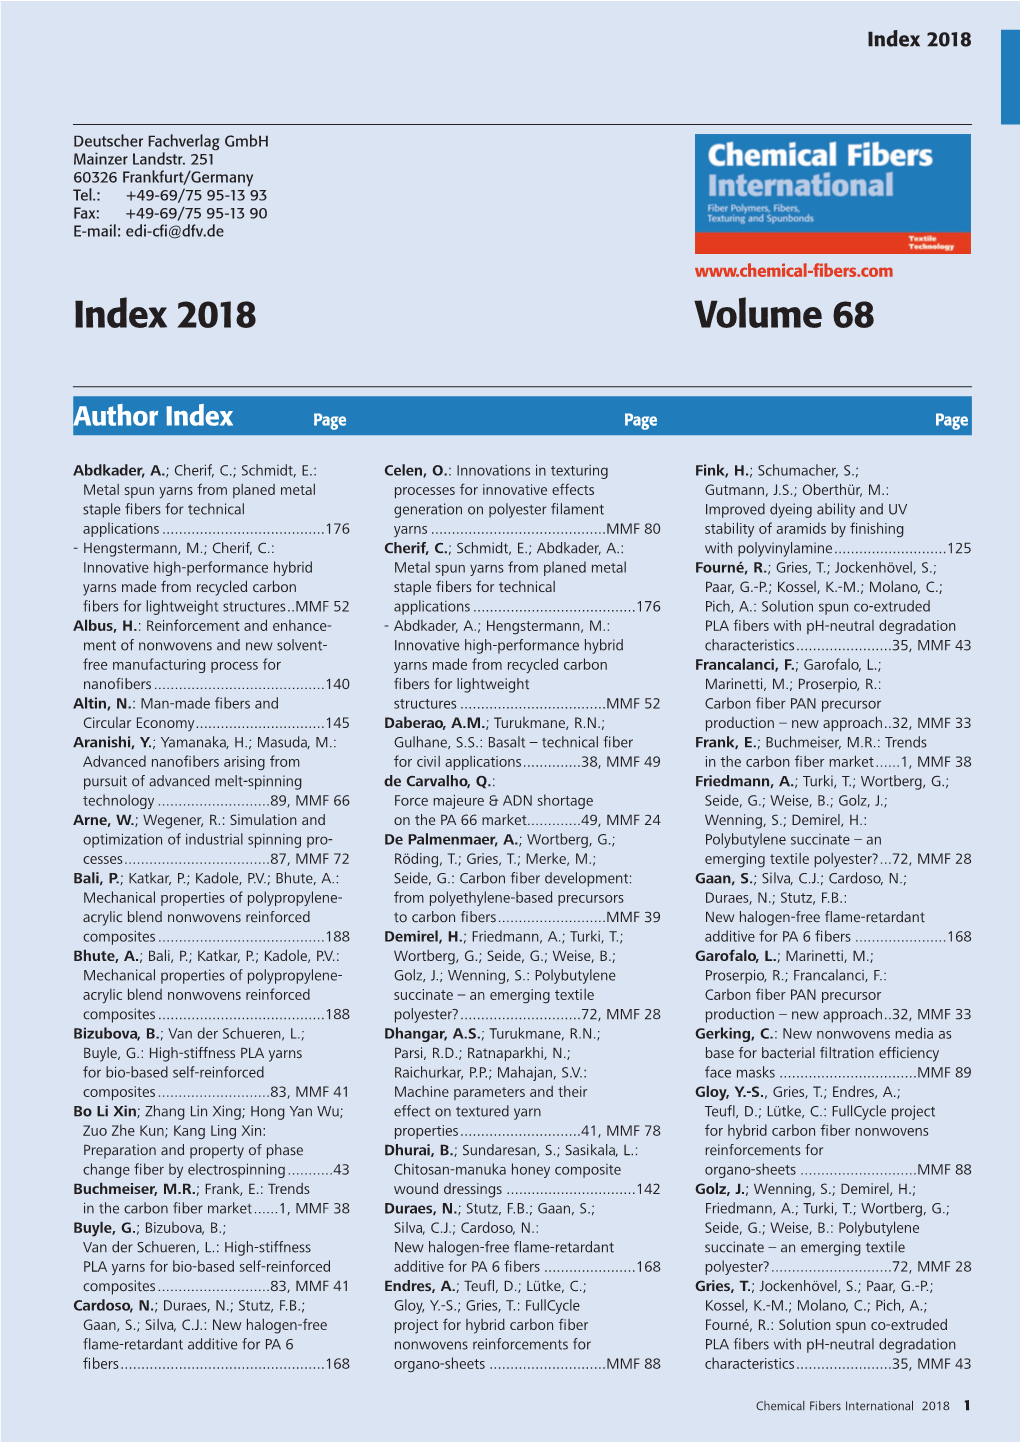 CFI-Index 2018 Jahresregister